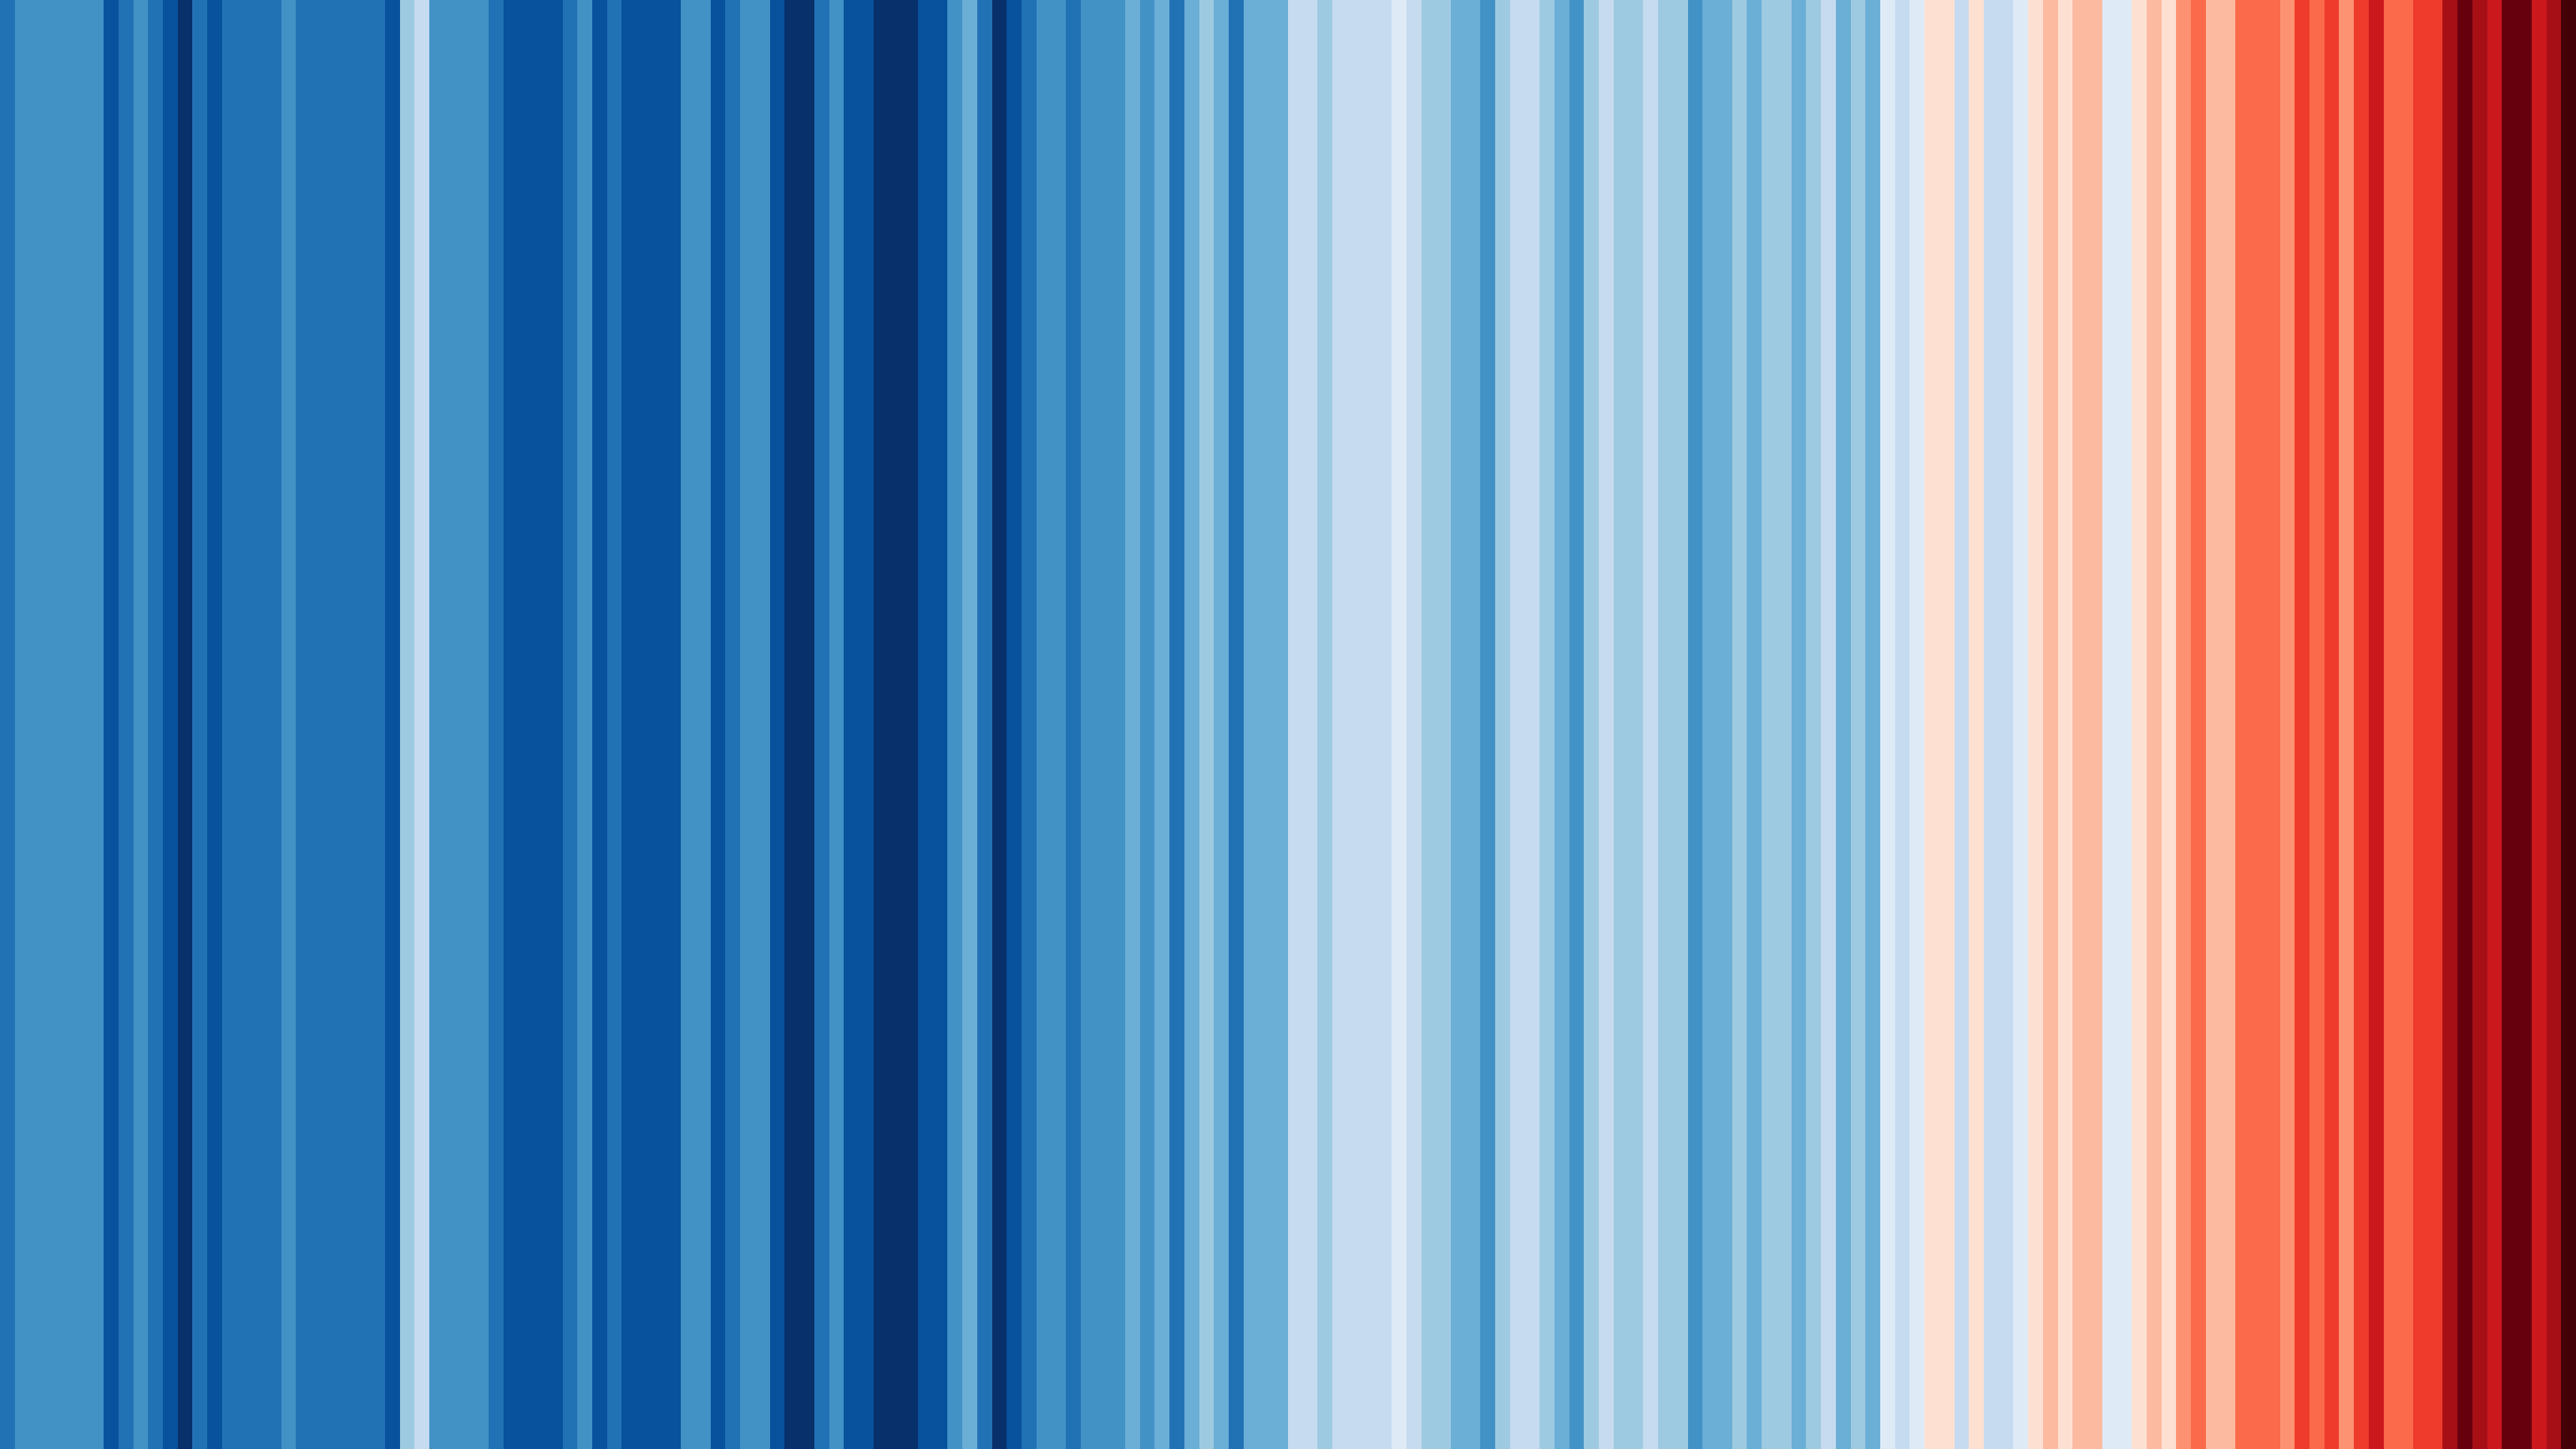 Global temperature change visualised using climate stripes (1850-2023) © Ed Hawkins, University of Reading